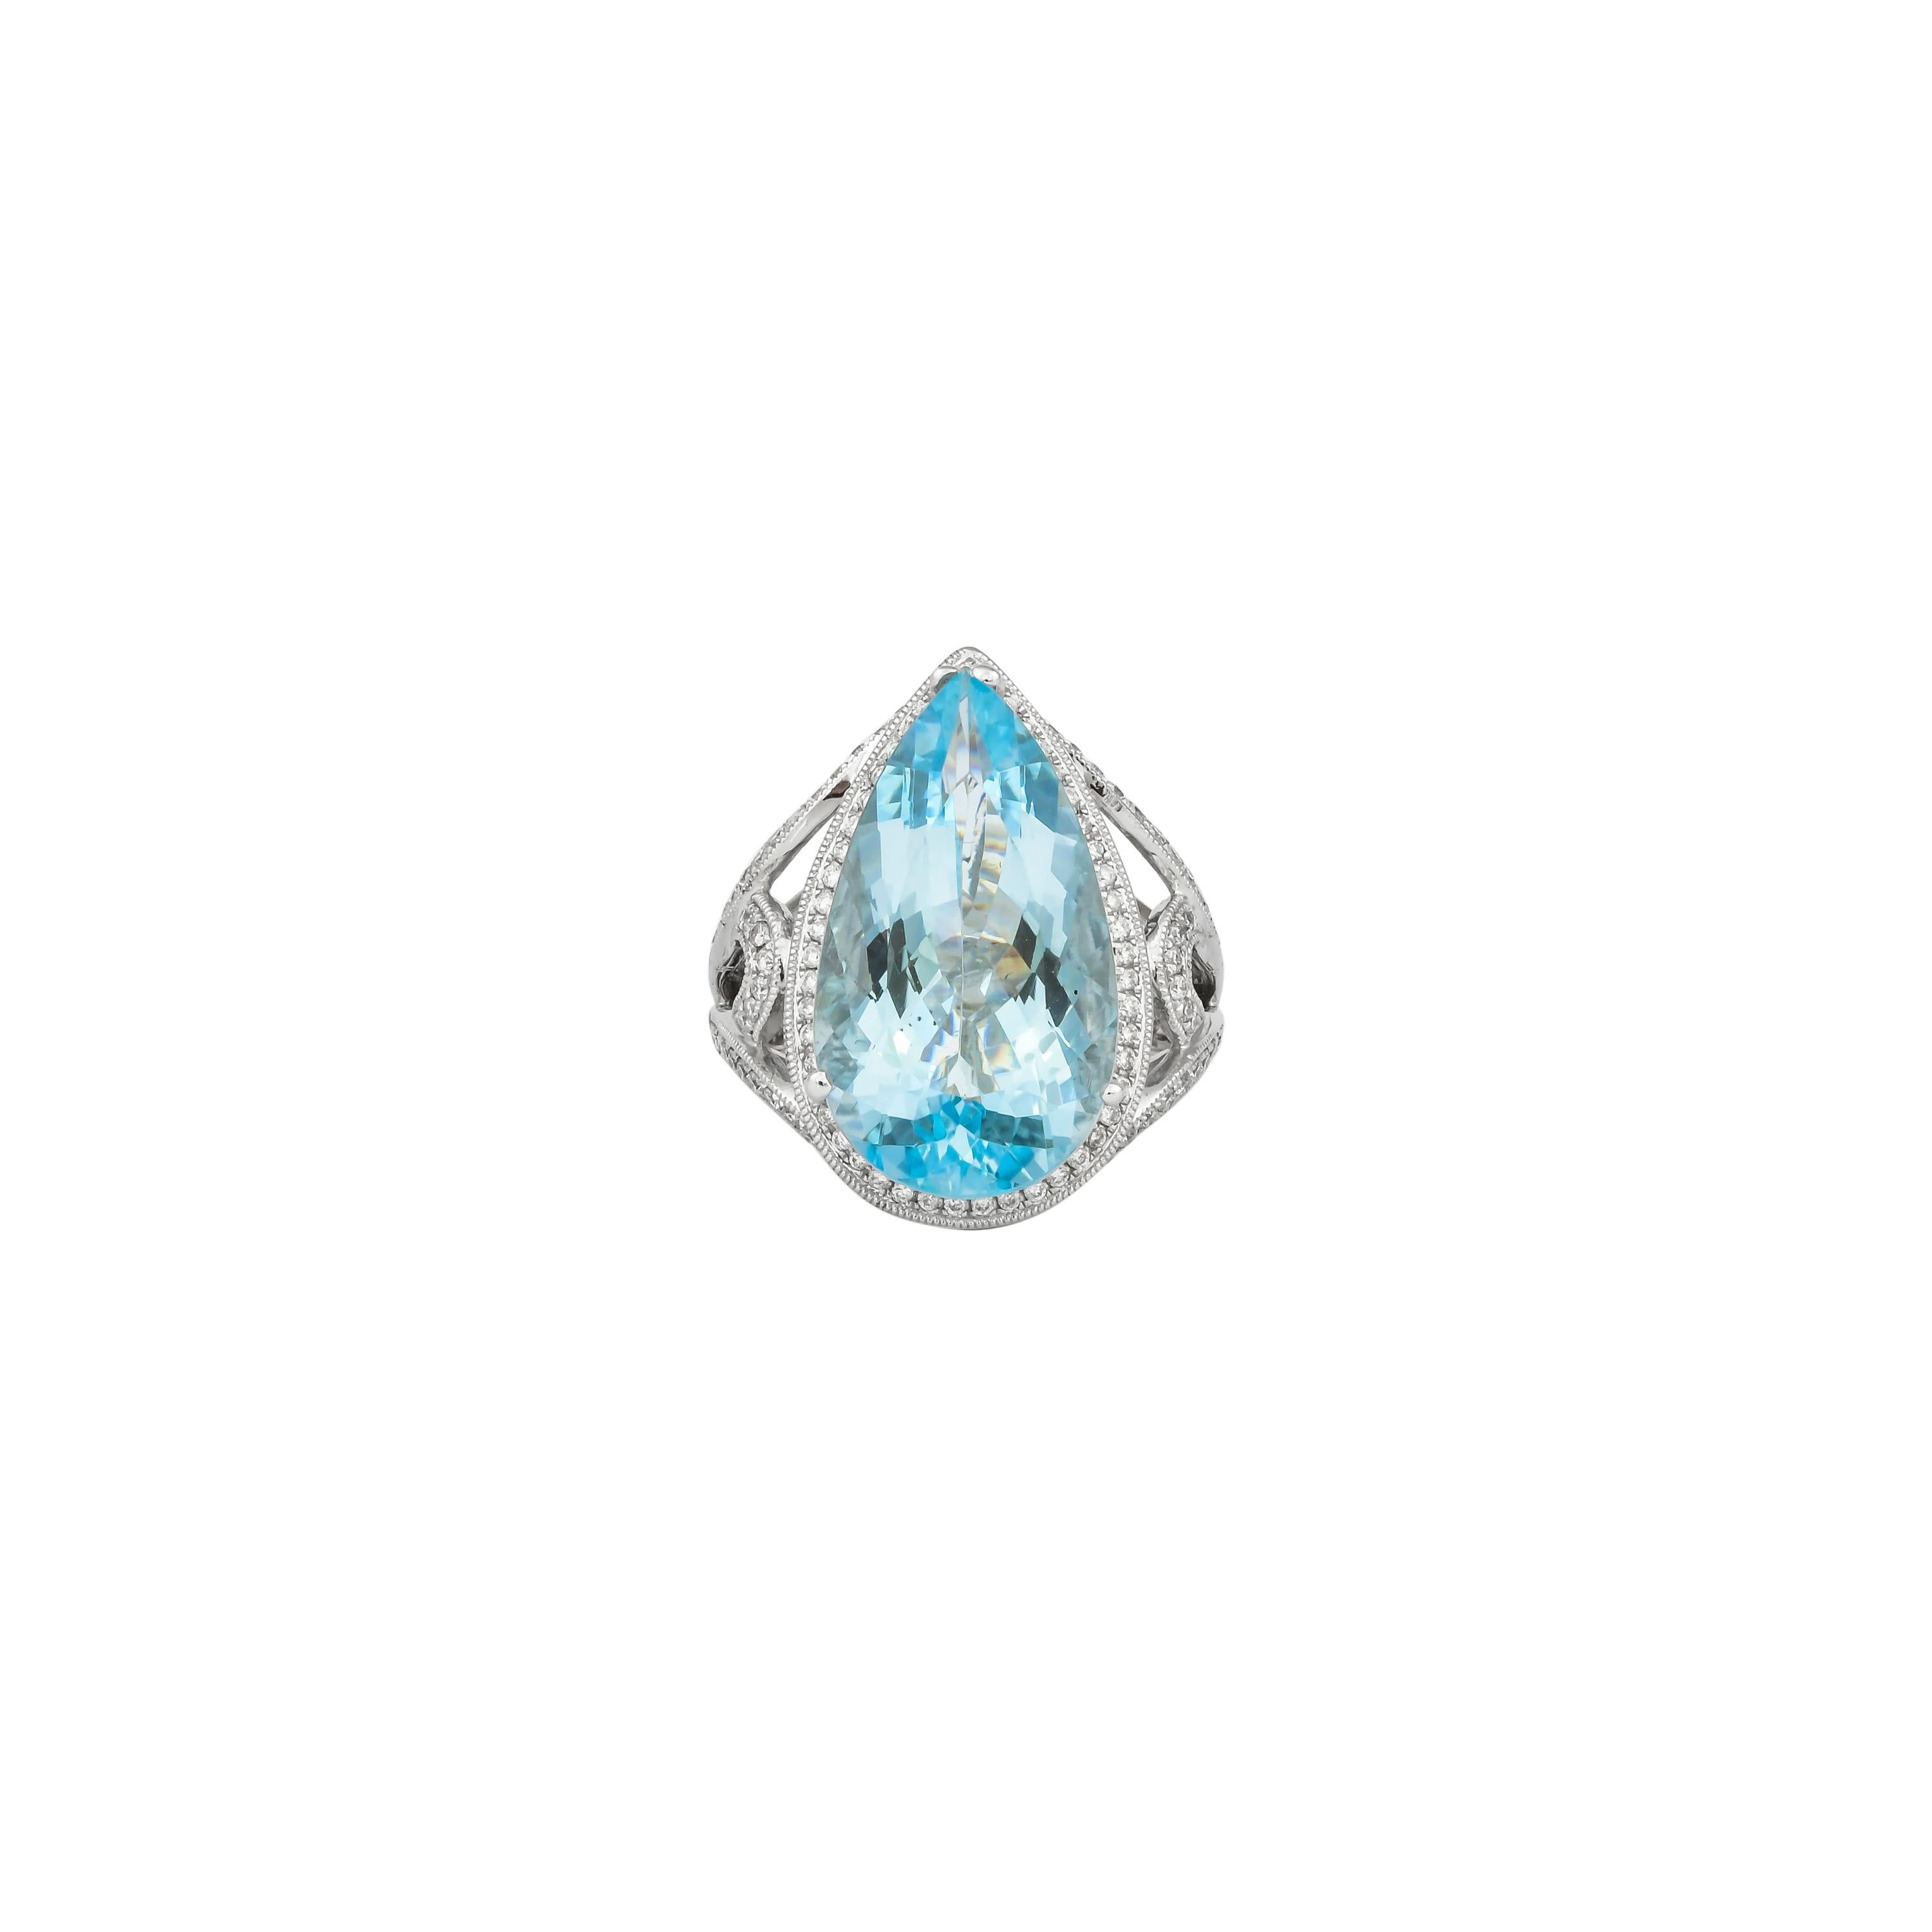 Contemporary 9.16 Carat Aquamarine and Diamond Ring in 18 Karat White Gold For Sale